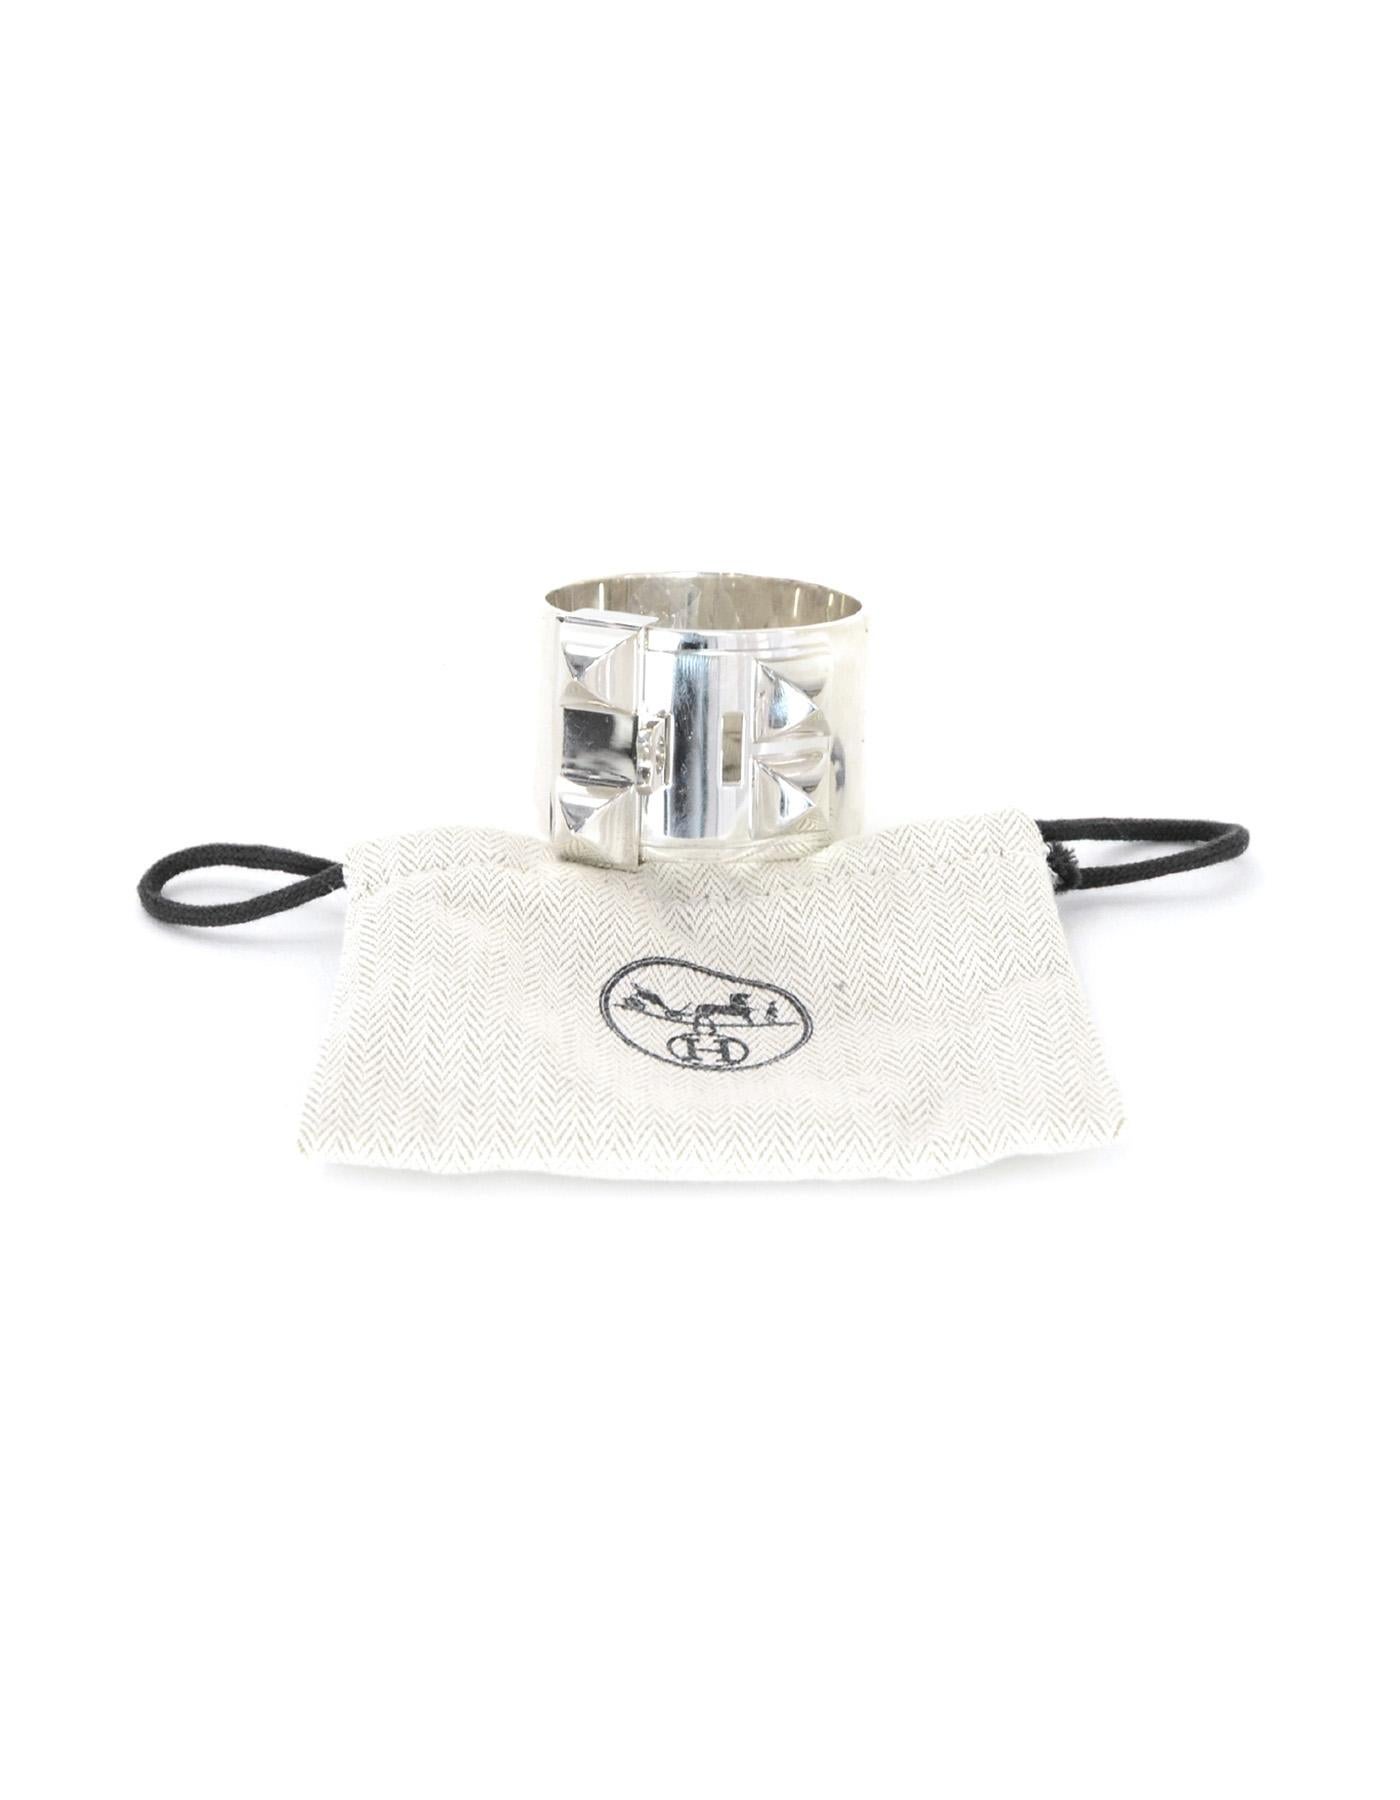 Hermes Sterling Silver CDC Collier de Chien Cuff Bracelet w/ Dust Bag 1